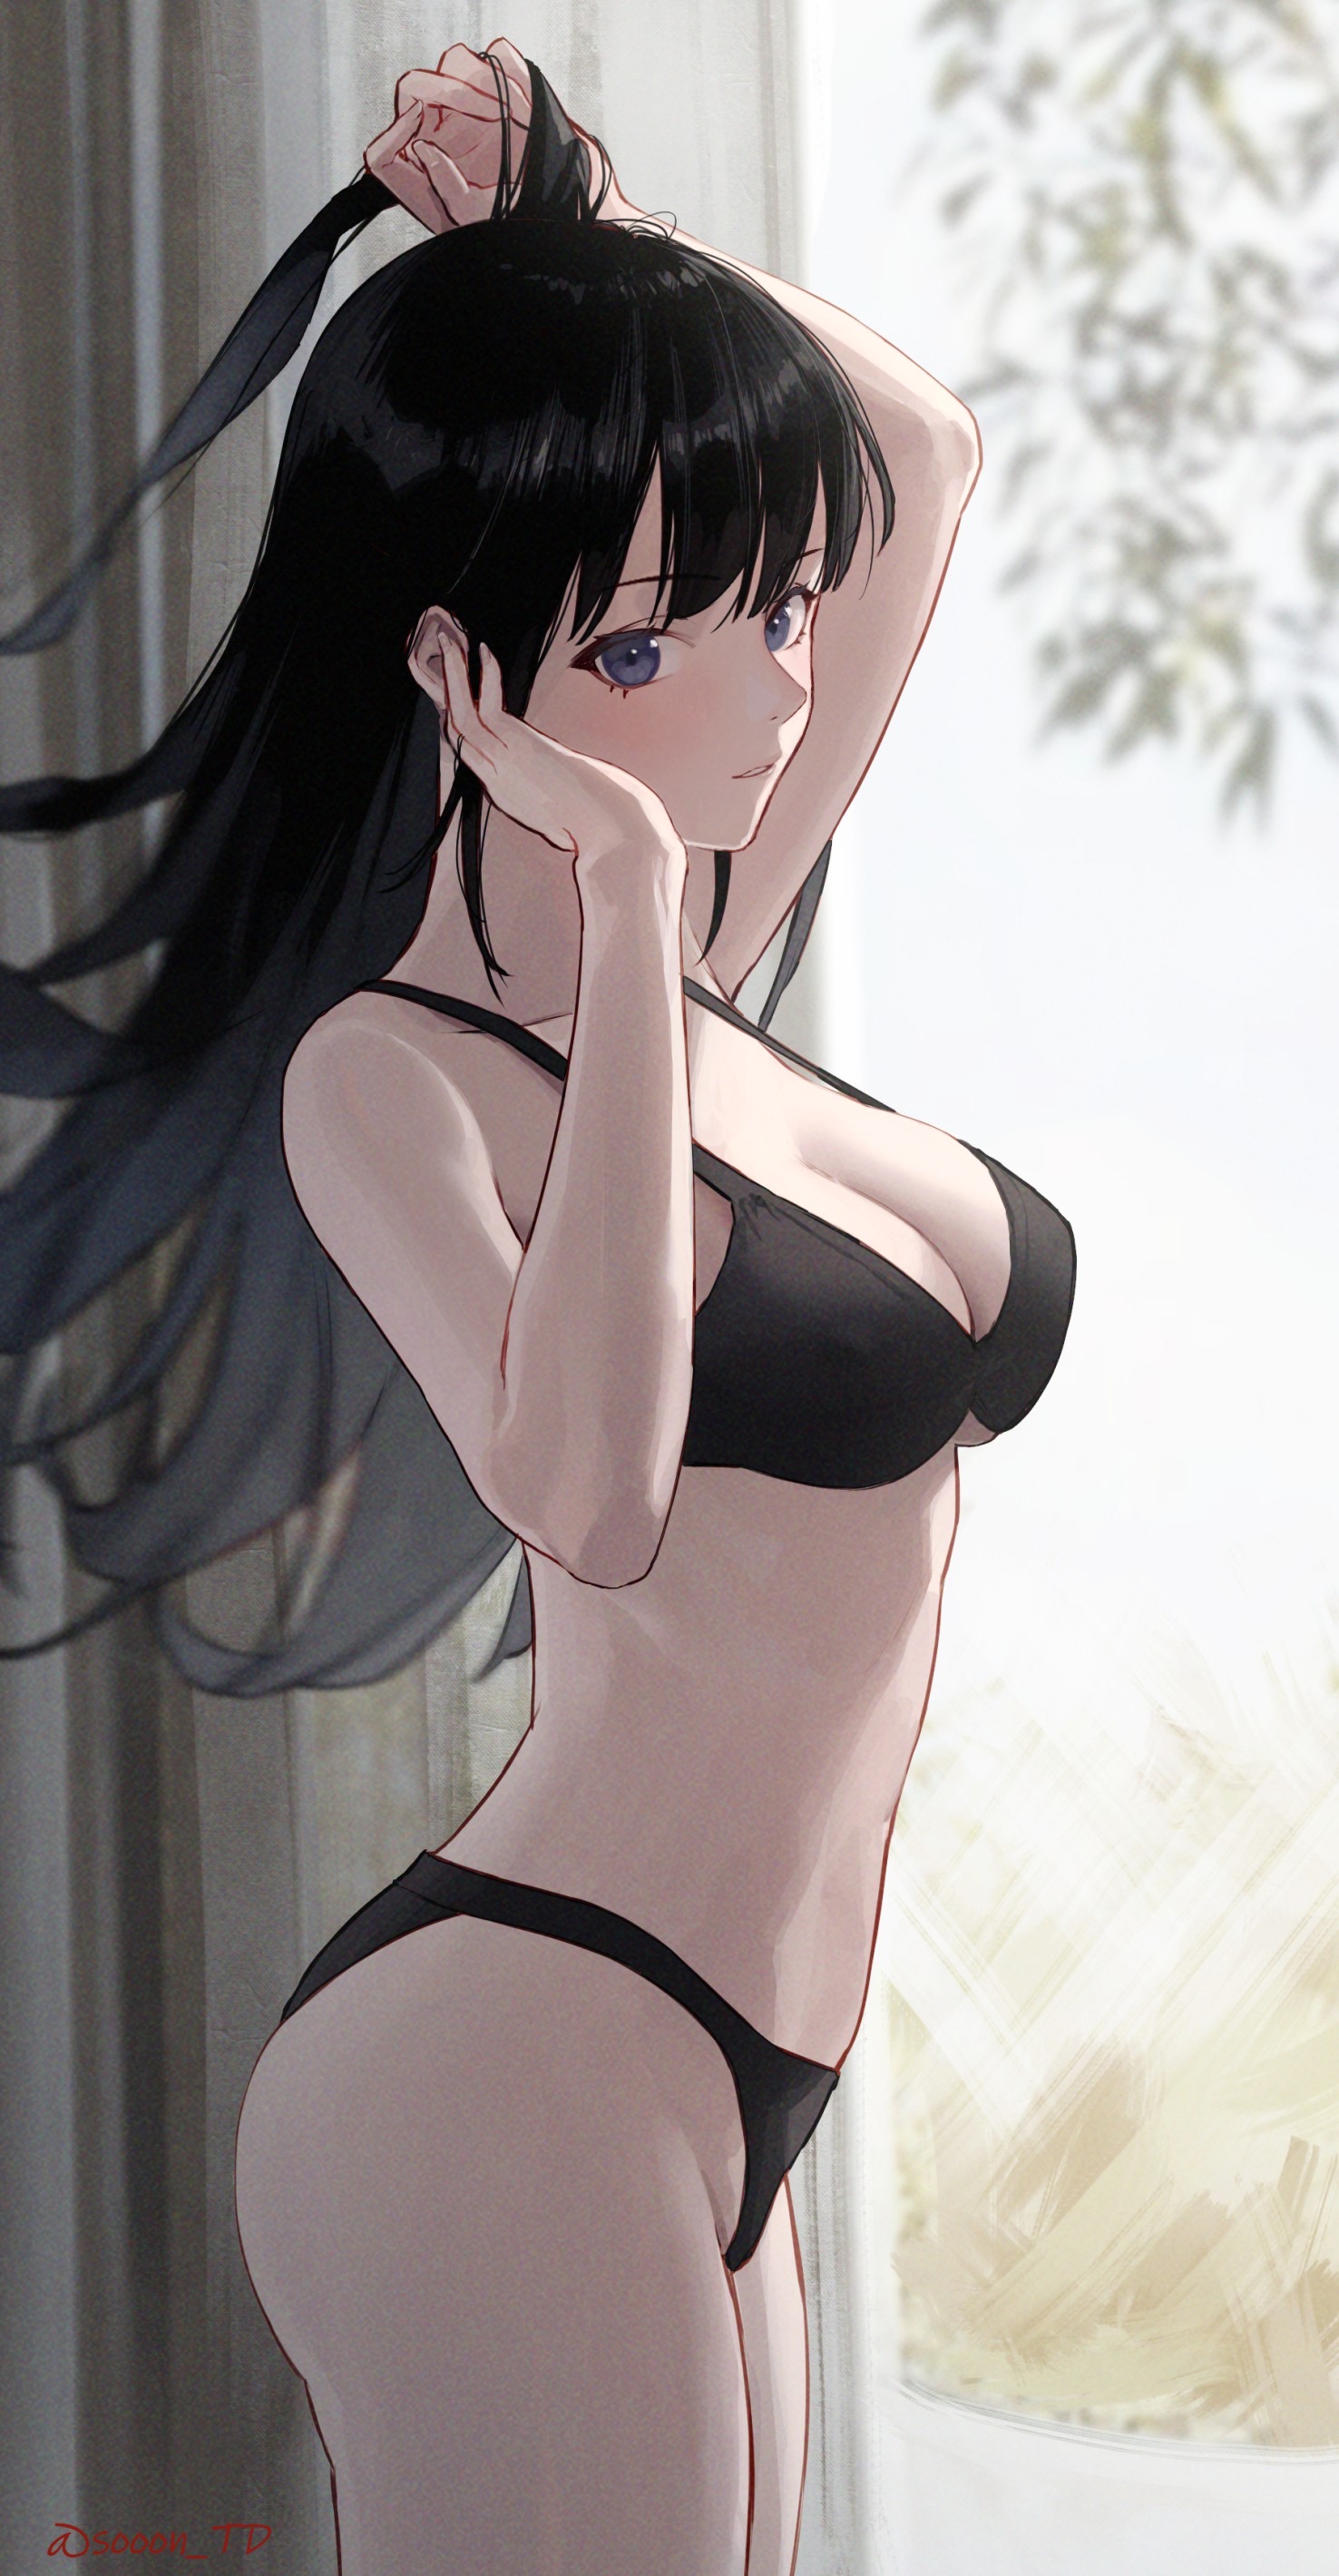 Anime 1476x2839 anime anime girls black bras bra black hair wet body cleavage underwear long hair portrait display looking at viewer big boobs signature